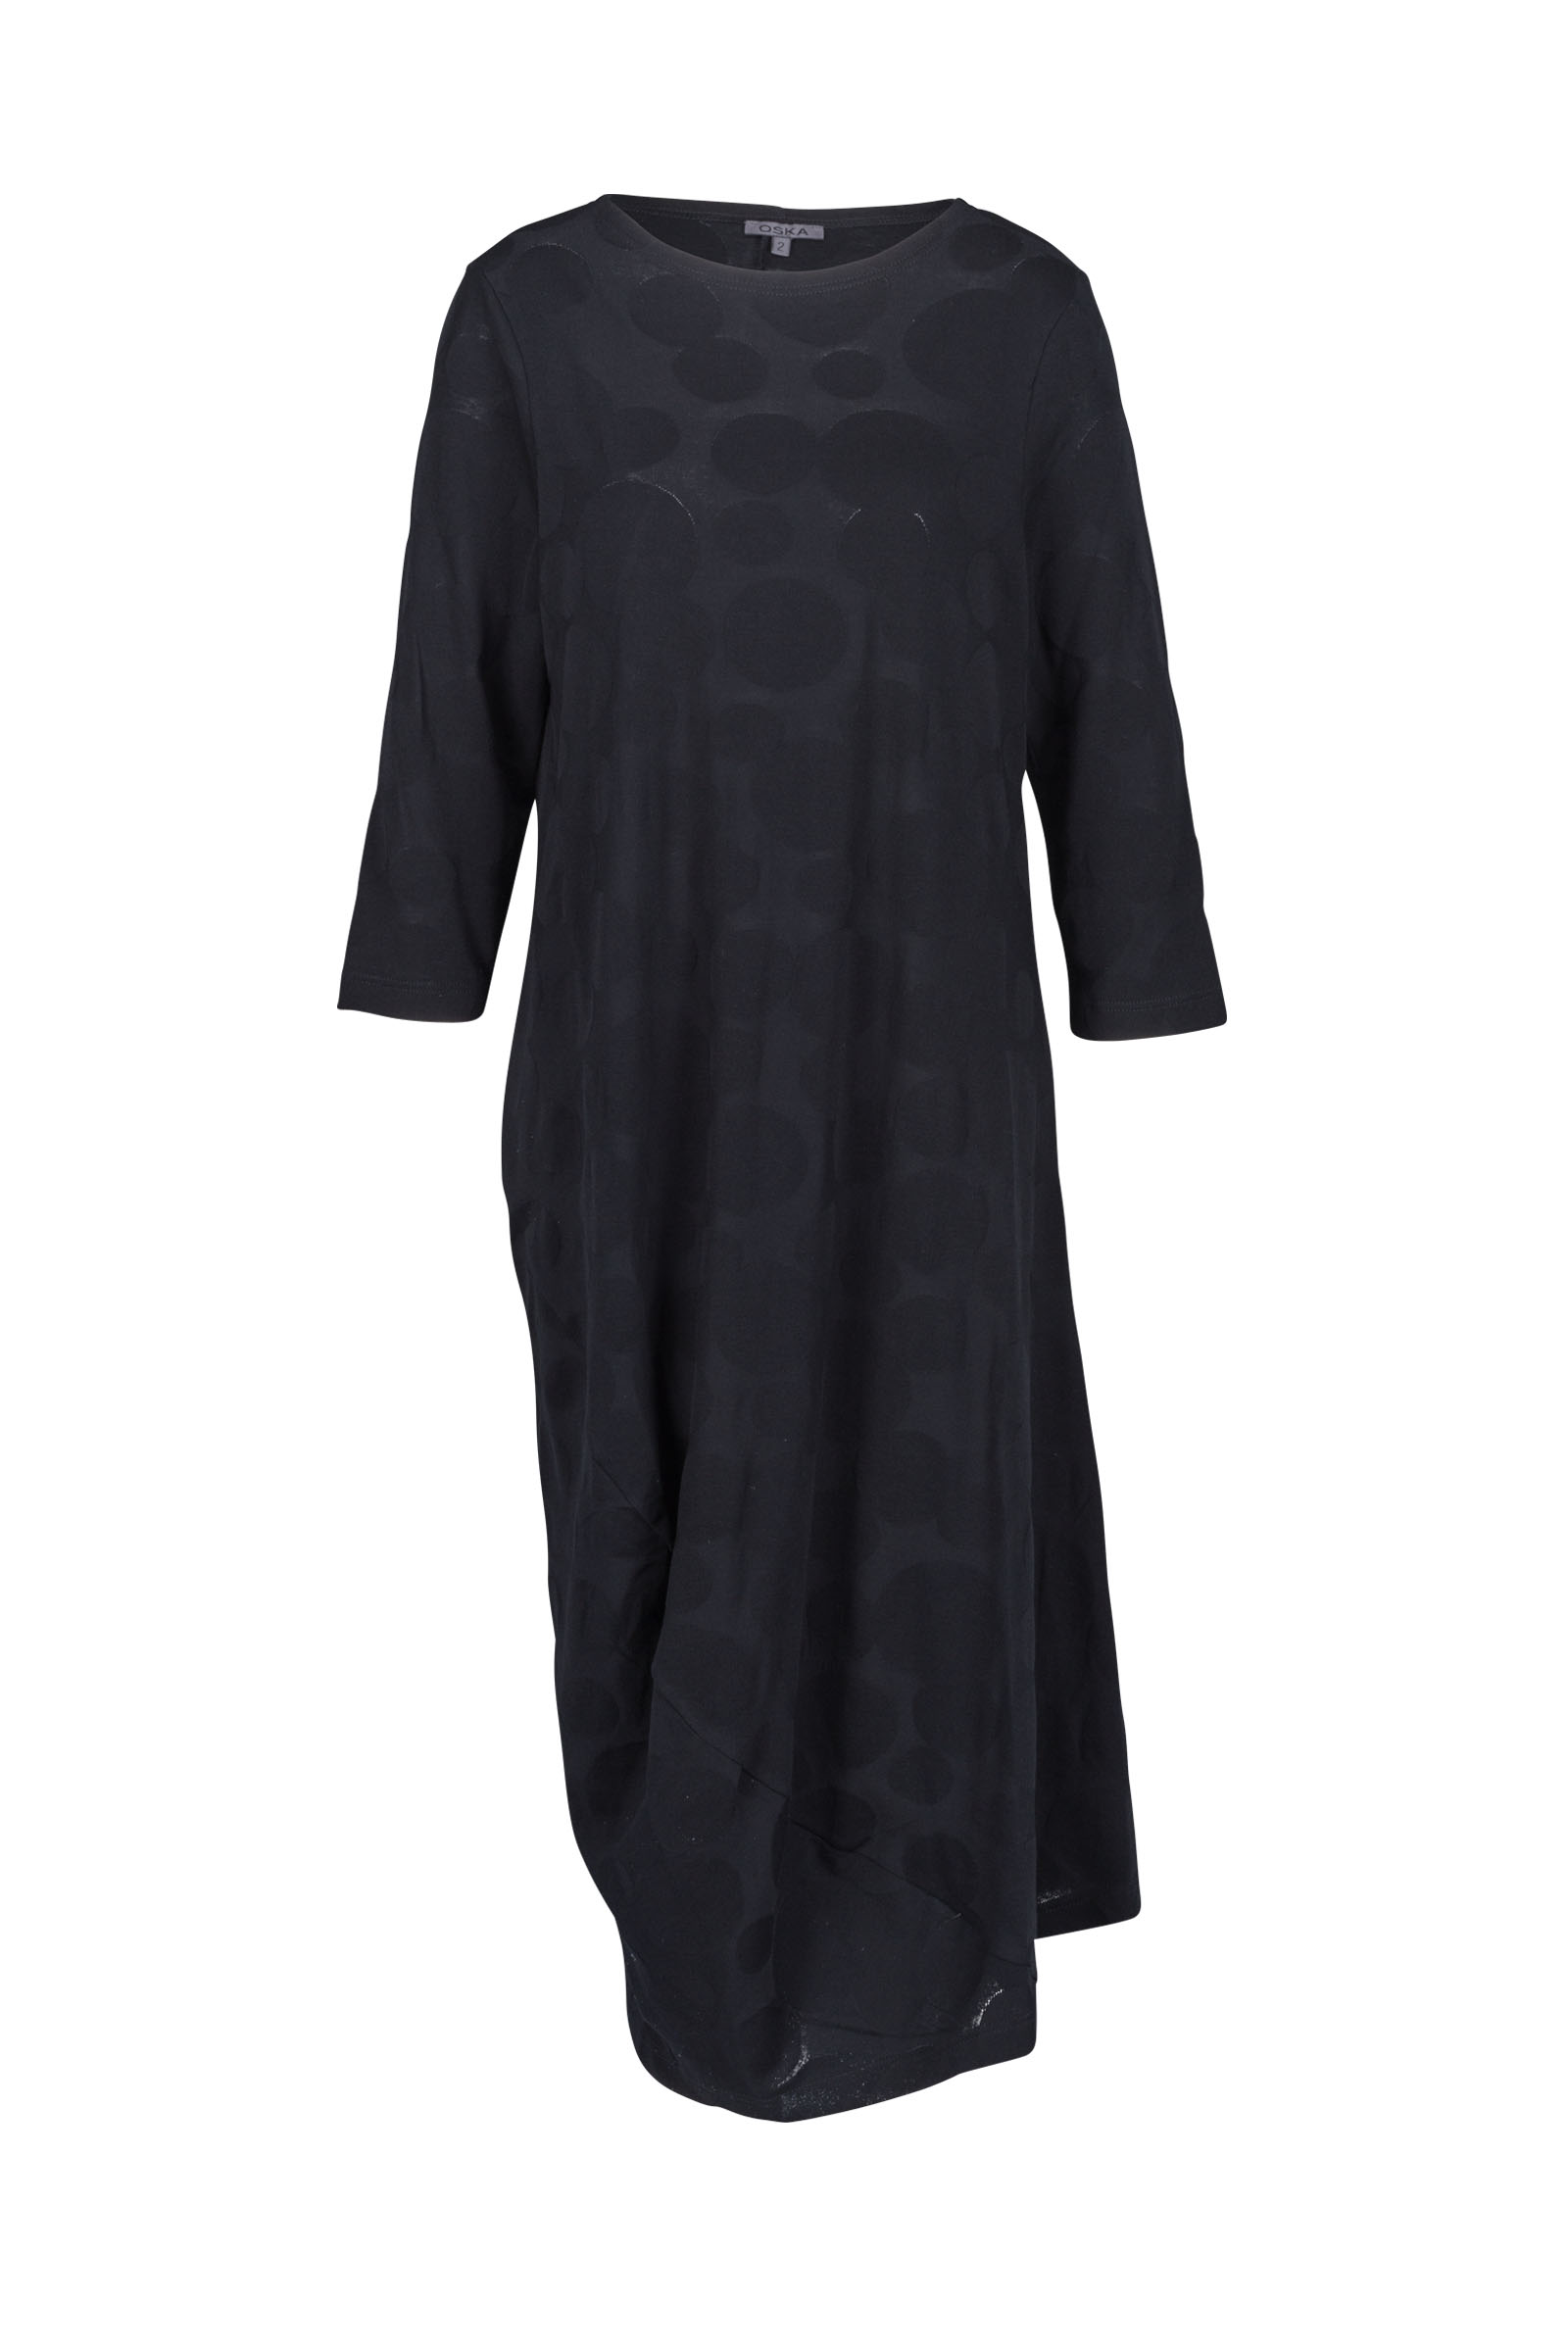 OSKA New York - Dress Tahani